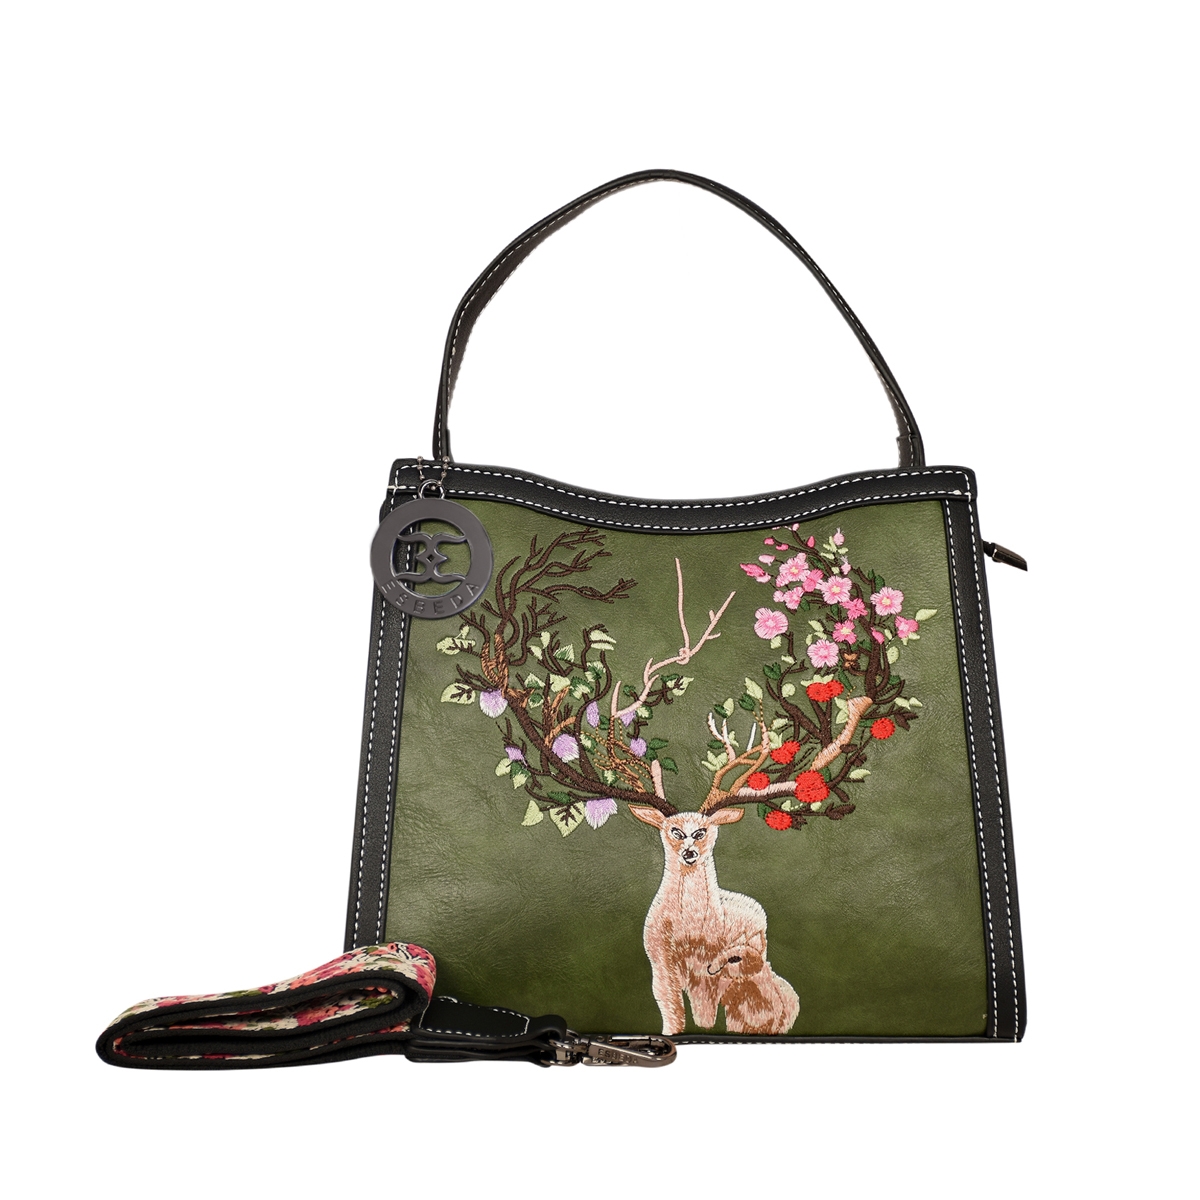 ESBEDA | ESBEDA Olive Green Color Embroidery Dear Handbag For Womens 0